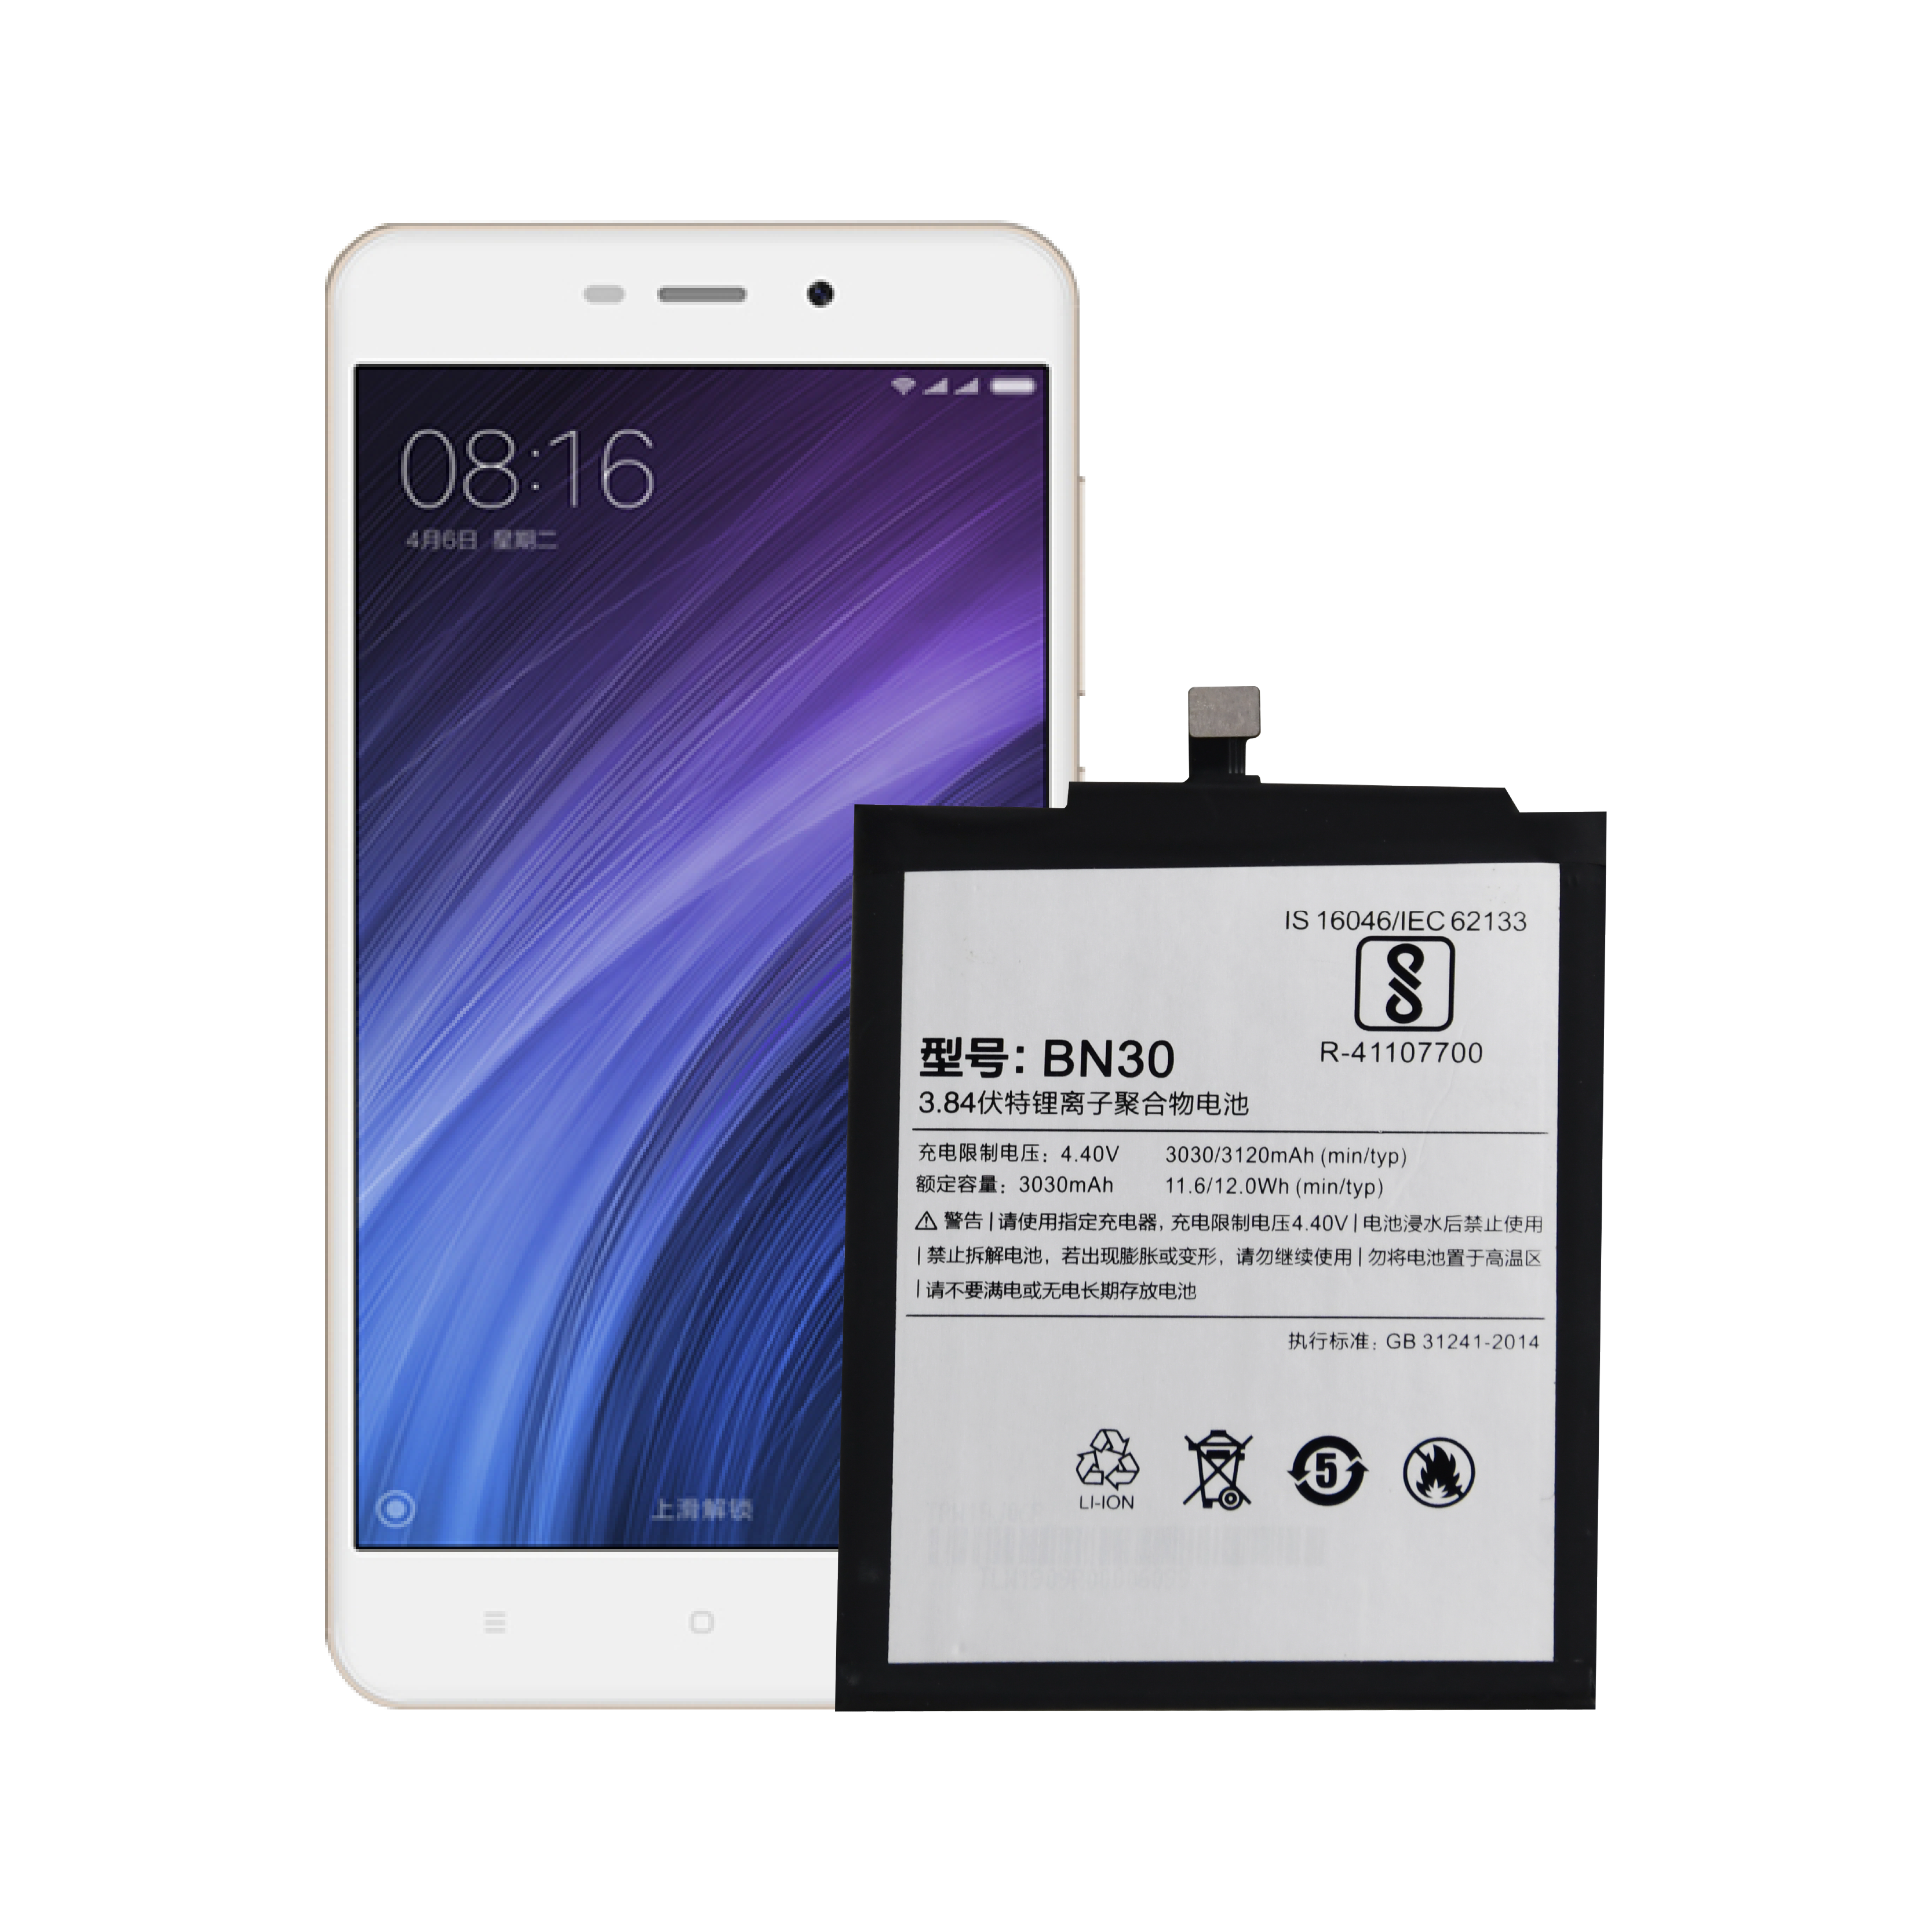 Hongmi 4A બેટરી માટે ઉચ્ચ ગુણવત્તાની OEM ઉપલબ્ધ તદ્દન નવી મોબાઇલ ફોન રિપ્લેસમેન્ટ બેટરી